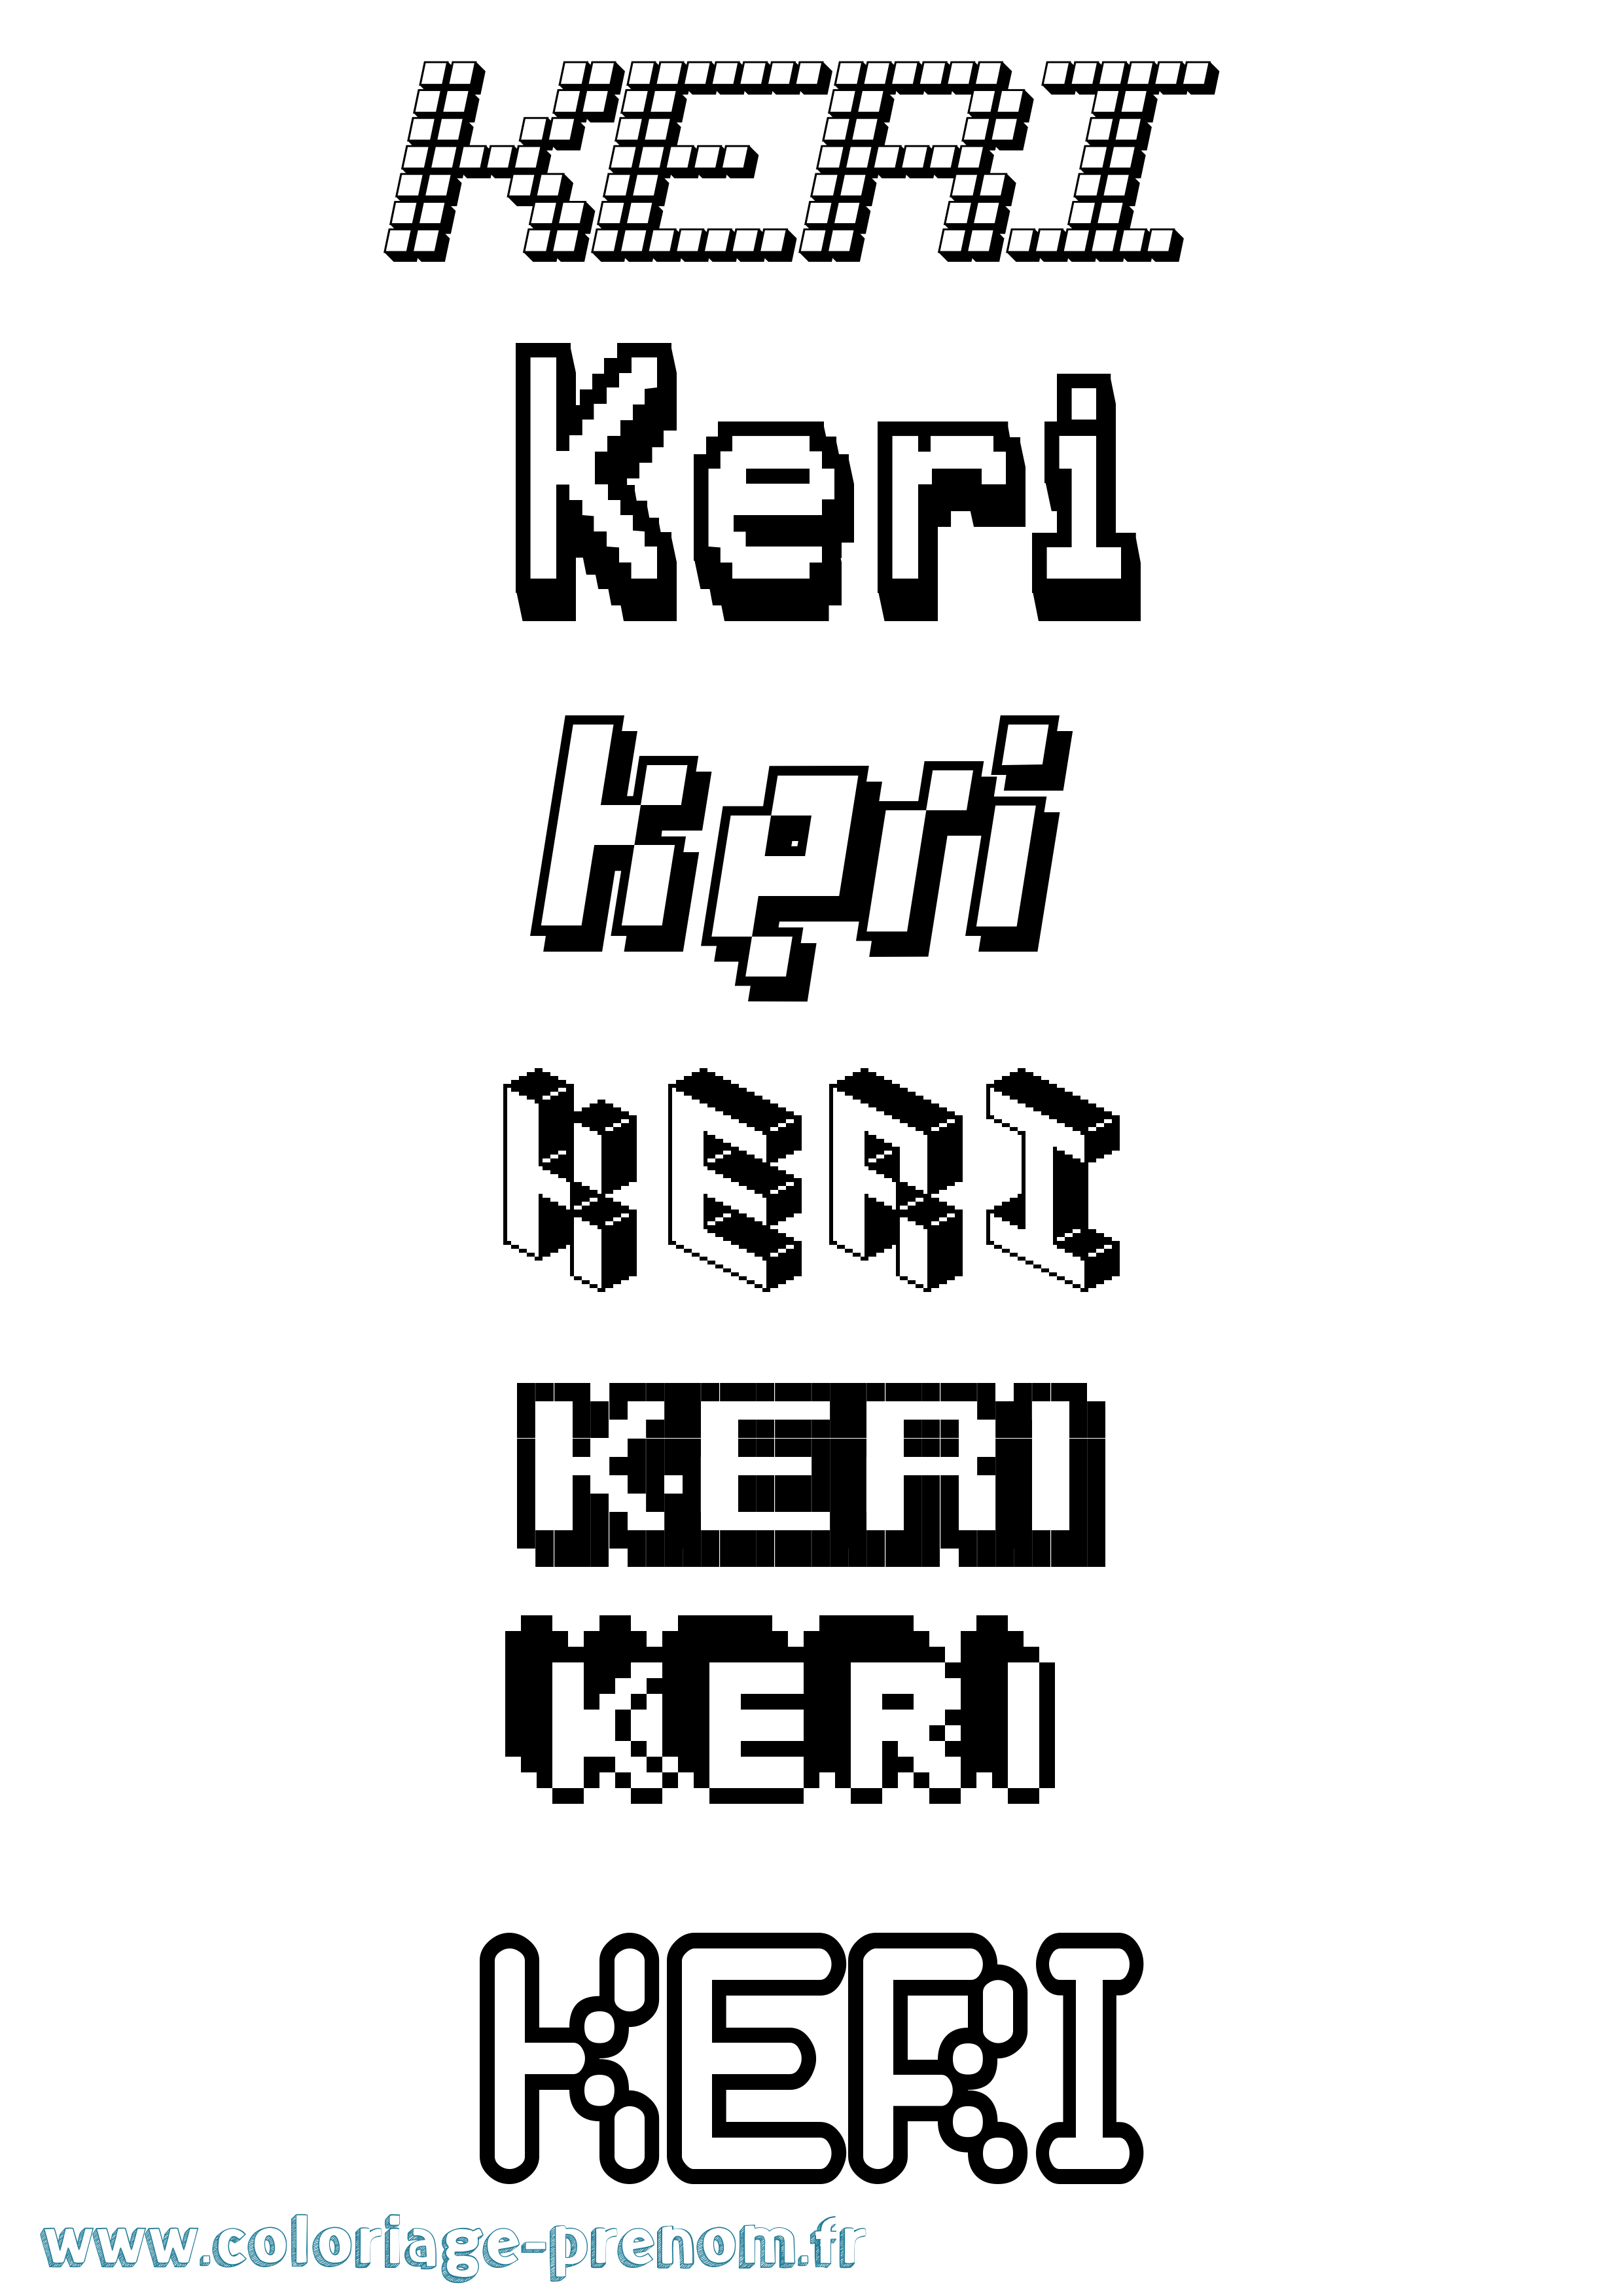 Coloriage prénom Keri Pixel